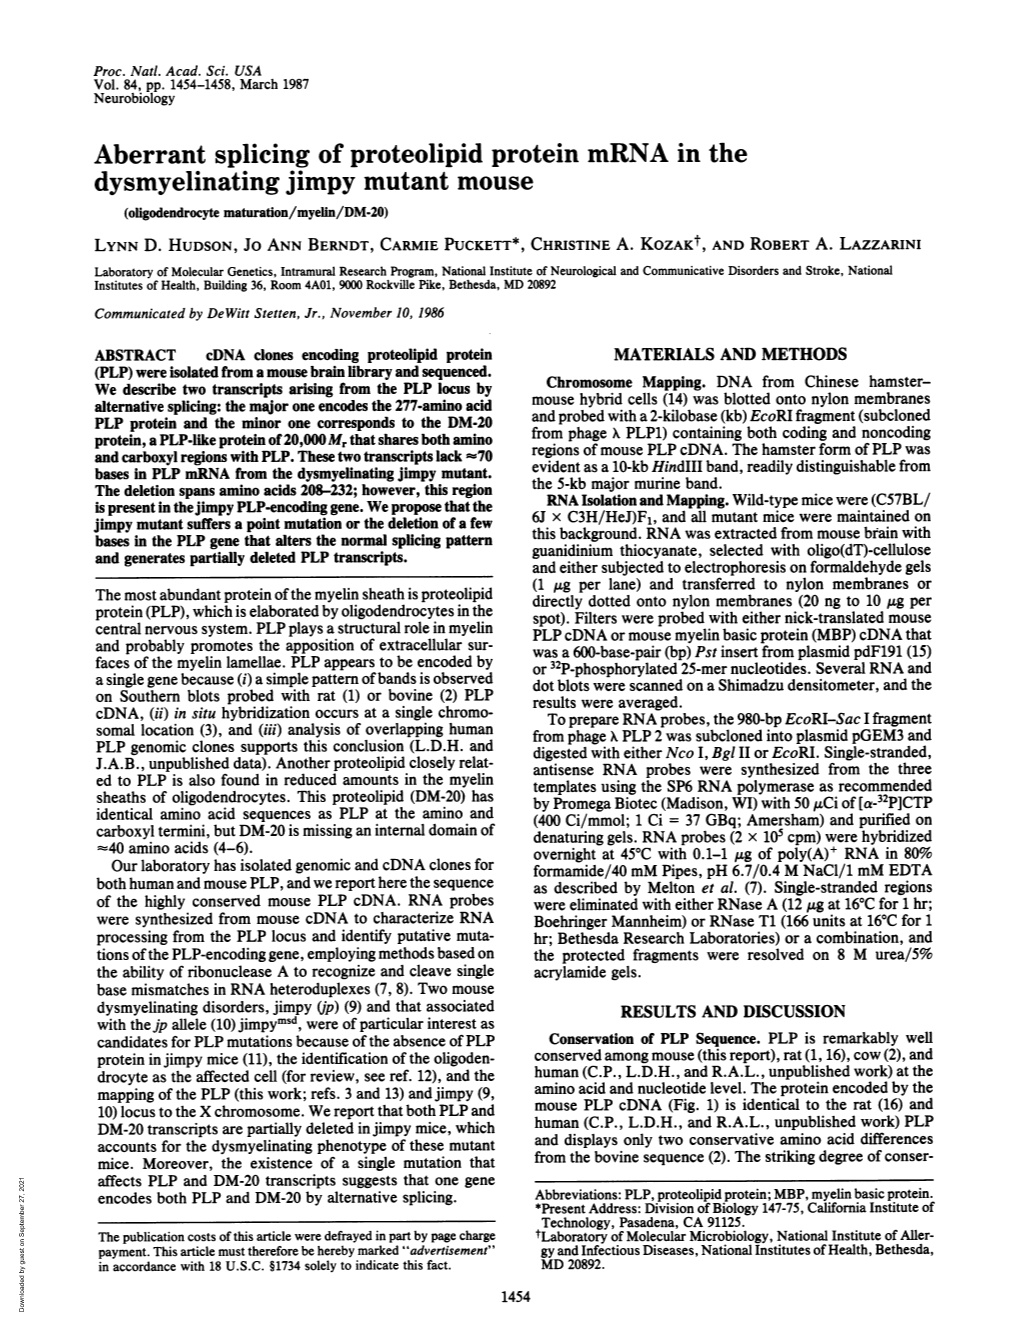 Dysmyelinating Jimpy Mutant Mouse (Oligodendrocyte Maturation/Myelin/DM-20) LYNN D